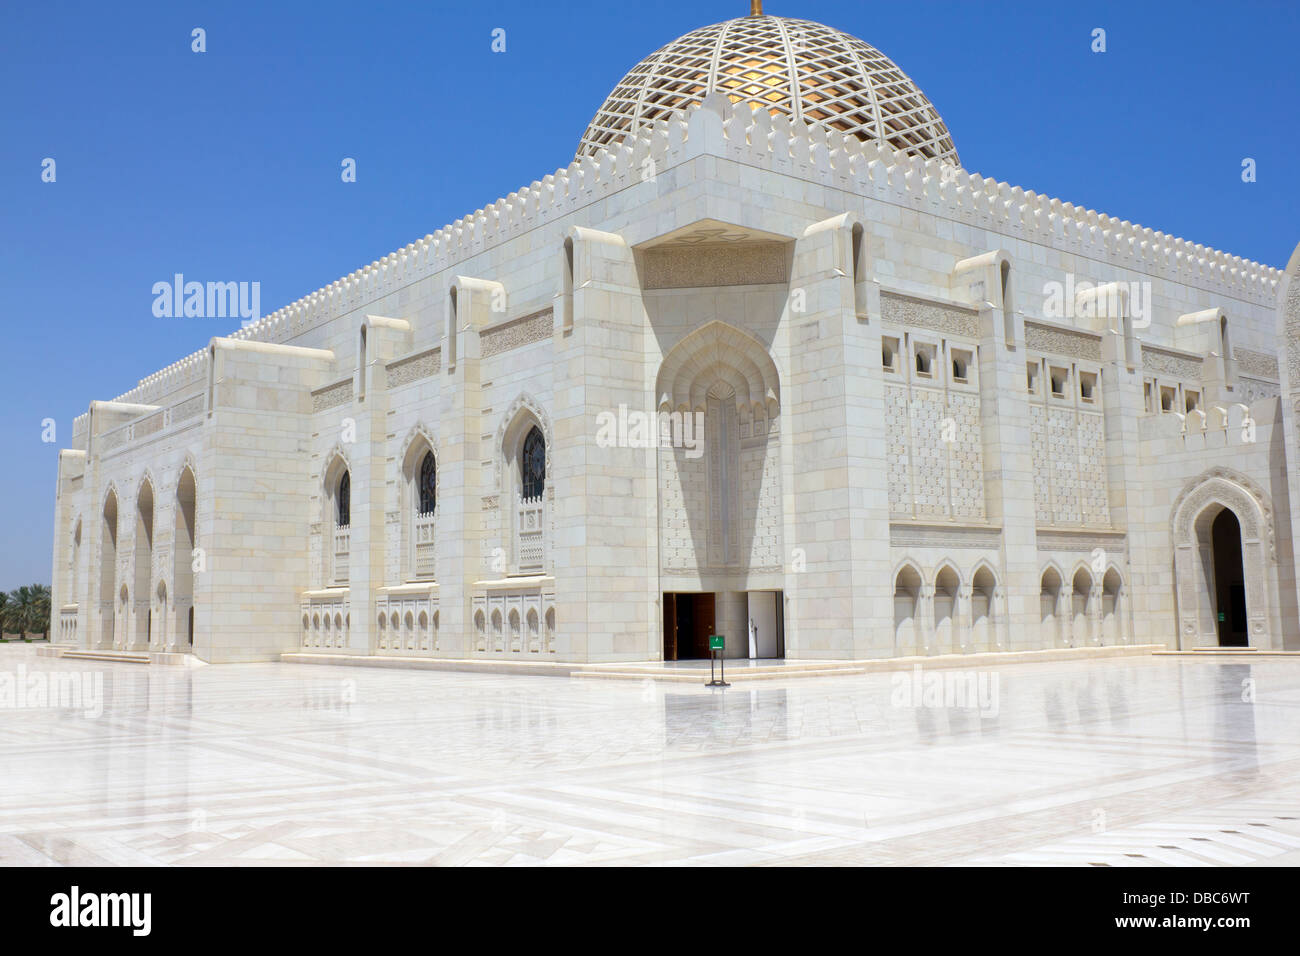 Sultan Qaboos Grand Mosque in Muscat, Oman. Stock Photo